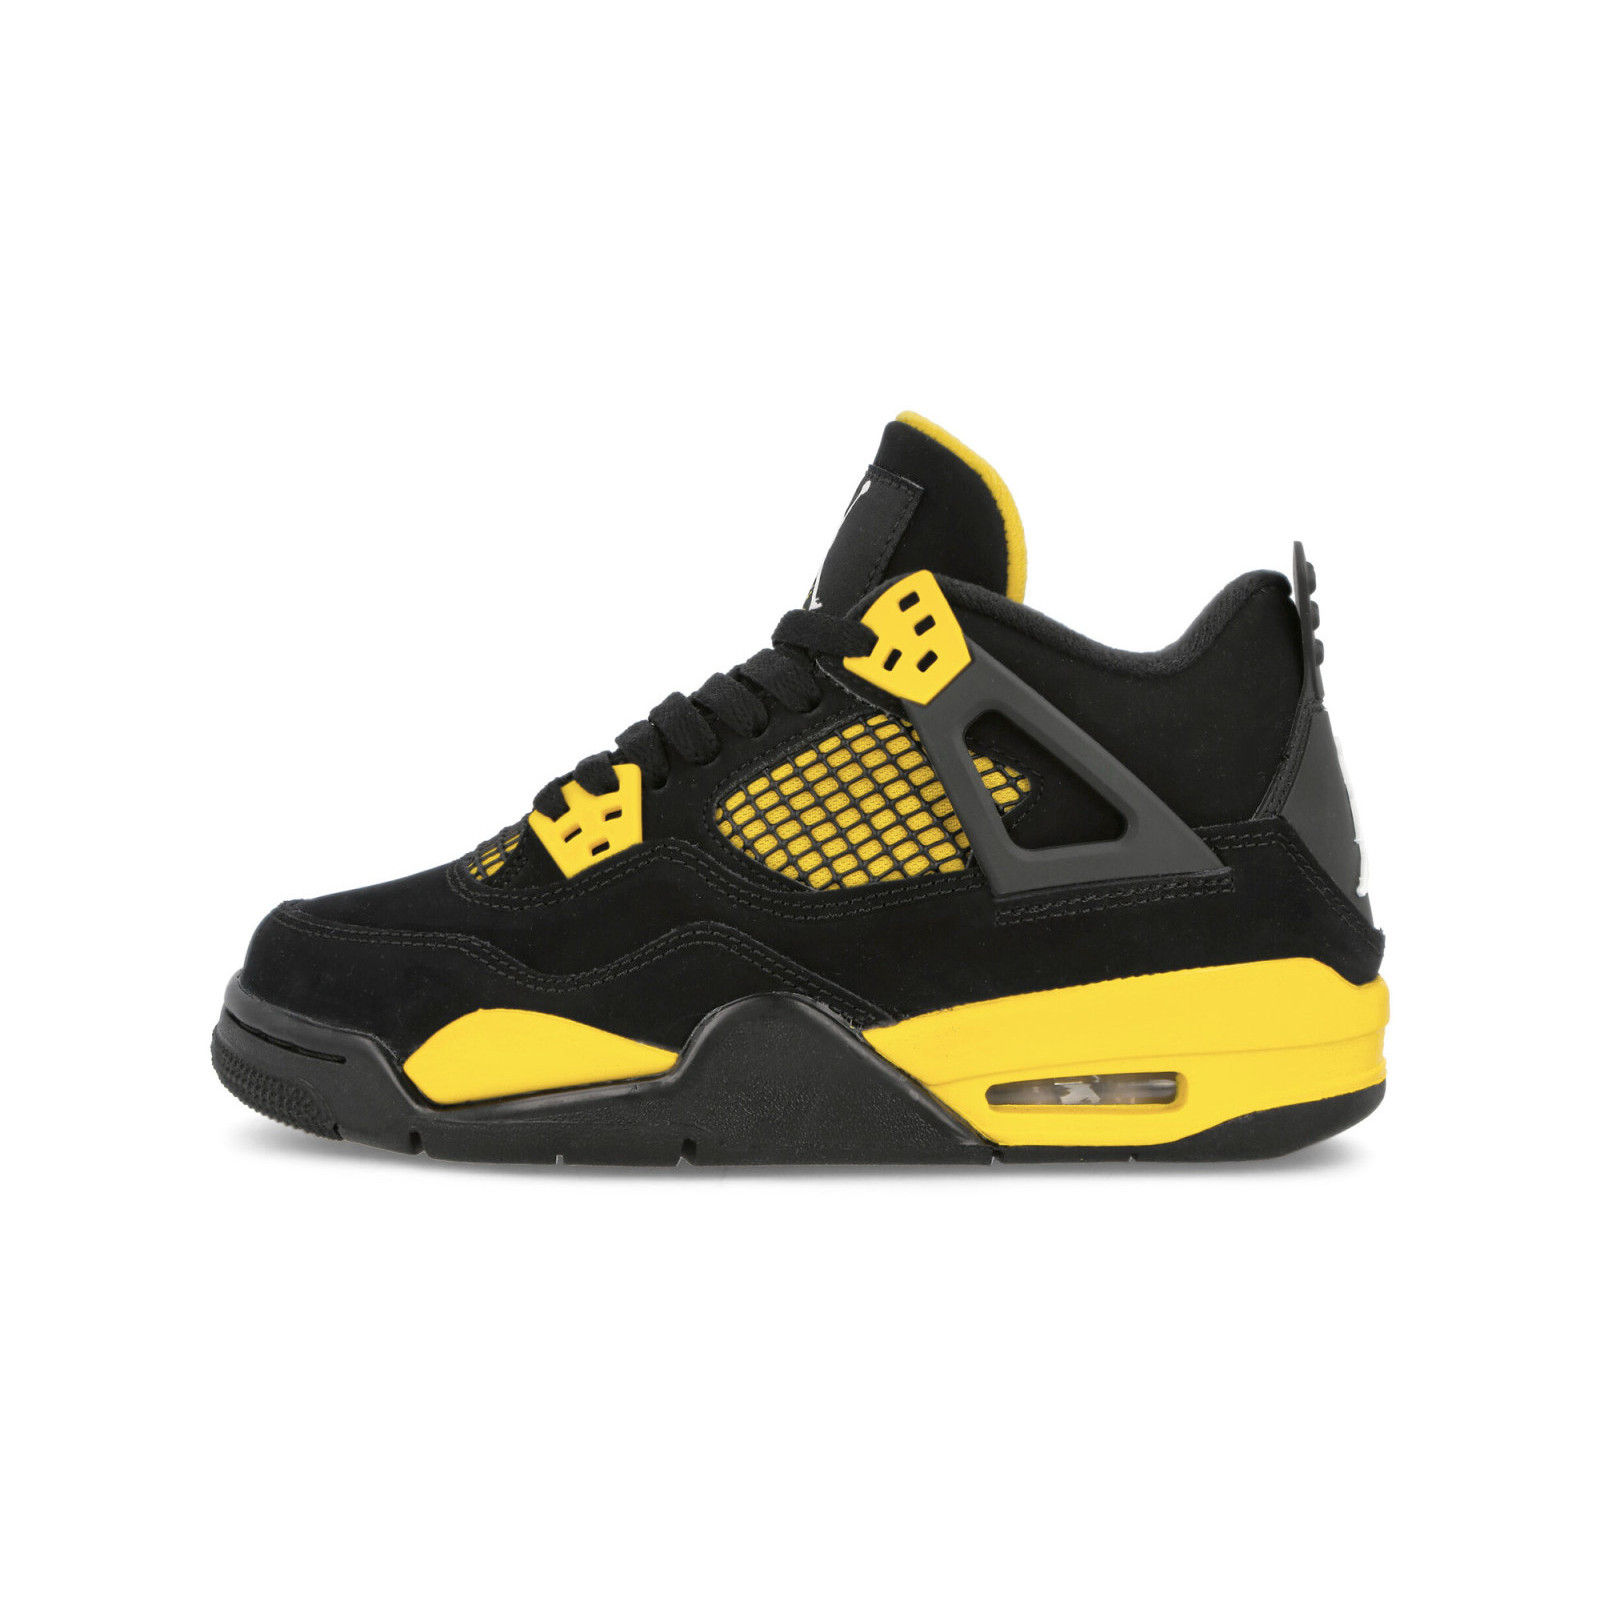 Air Jordan 4 Retro
« Tour Yellow »